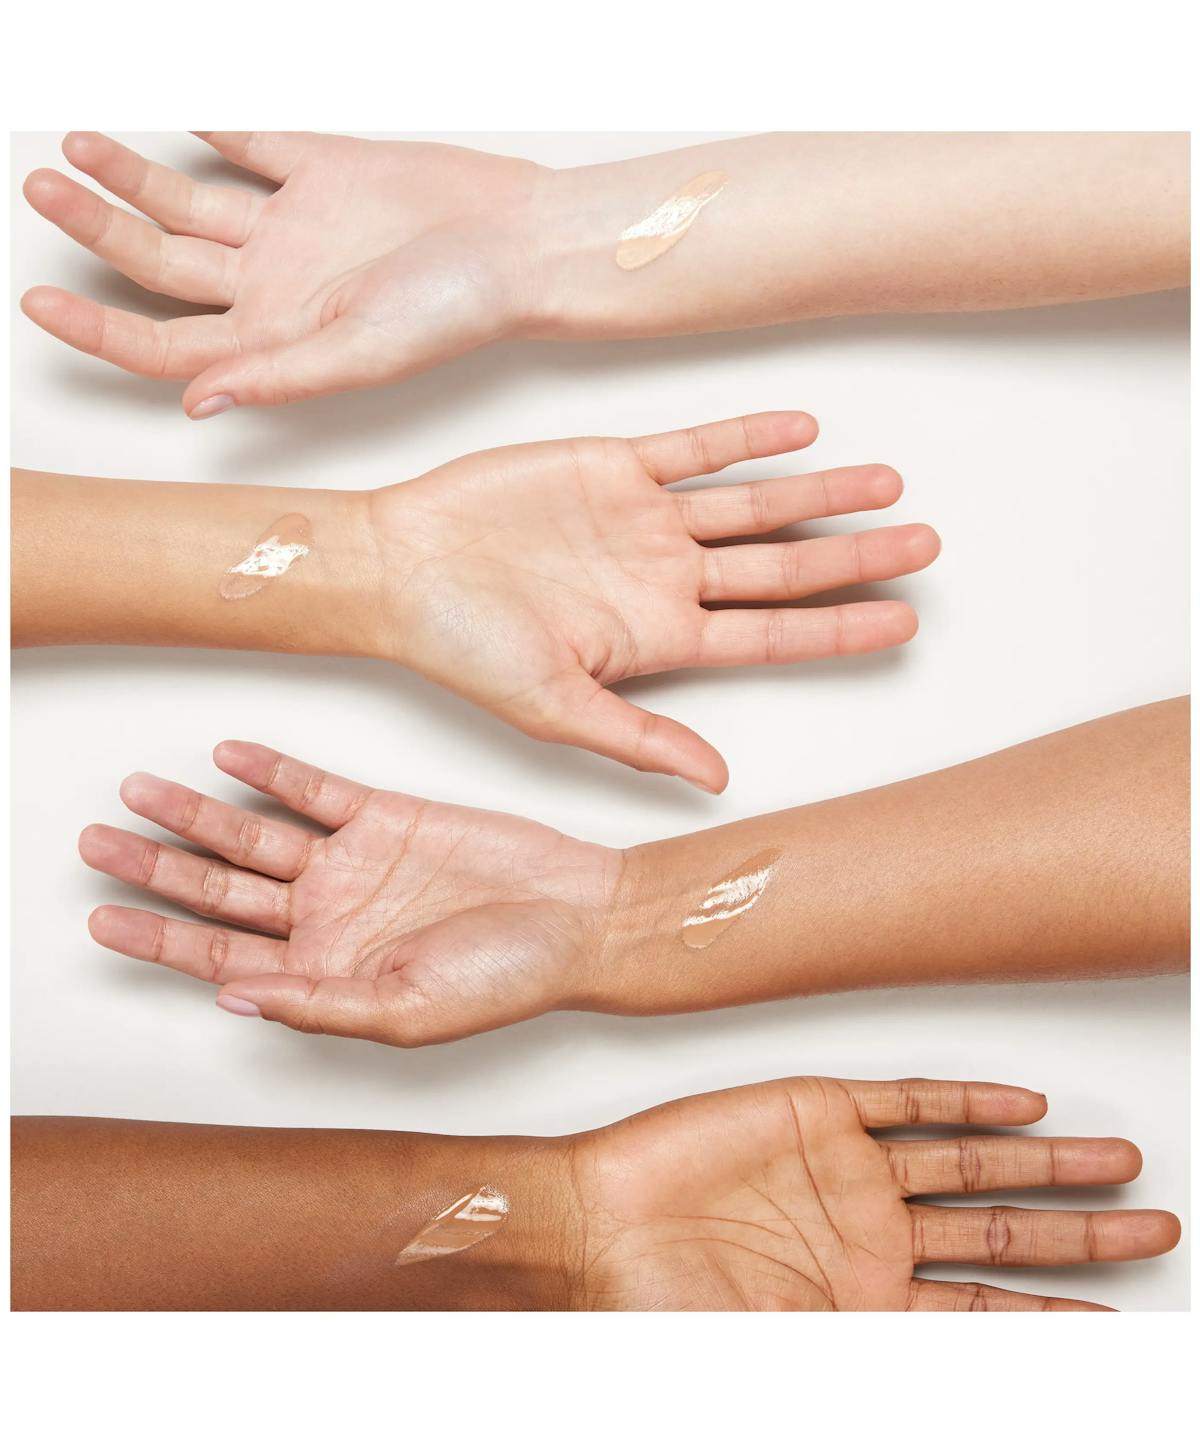 Unsun Cosmetics Mineral Tinted Face Sunscreen Lotion - Light